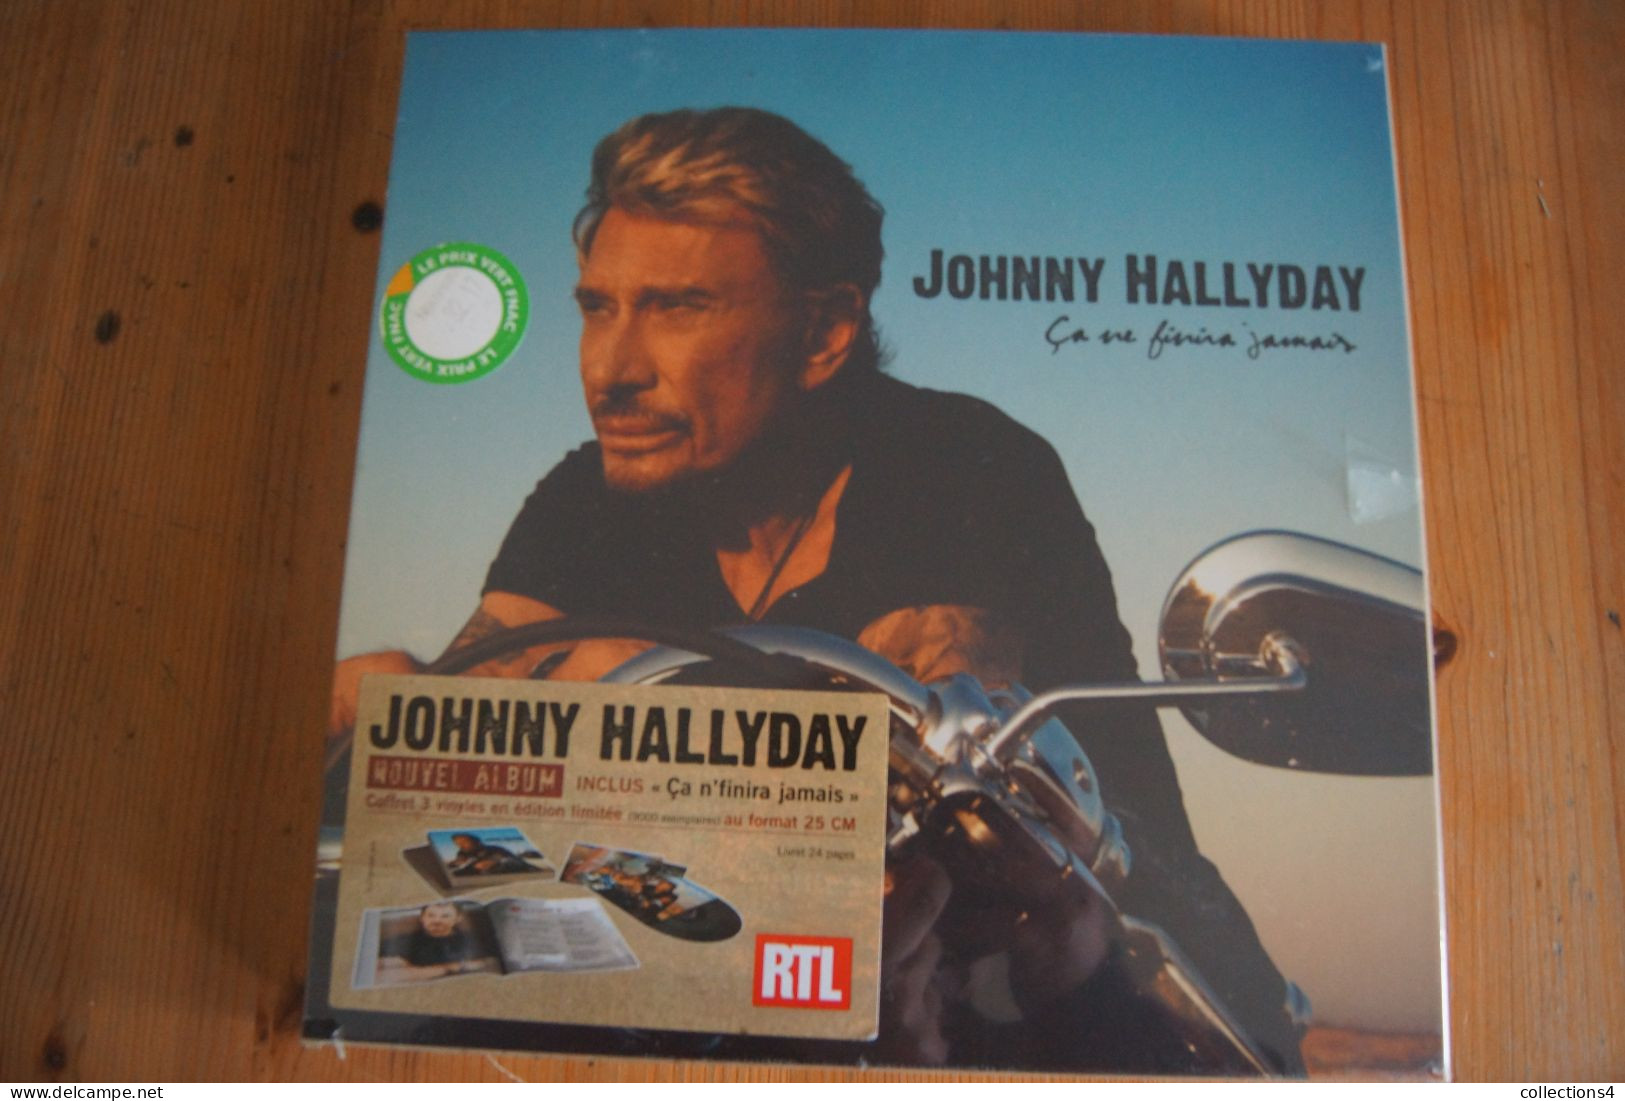 JOHNNY HALLYDAY CA NE FINIRA JAMAIS COFFRET 3 VINYLES 25 CM NEUF SCELLE EDITION LIMITEE 9000 EXEMPLAIRES VALEUR+ - Rock